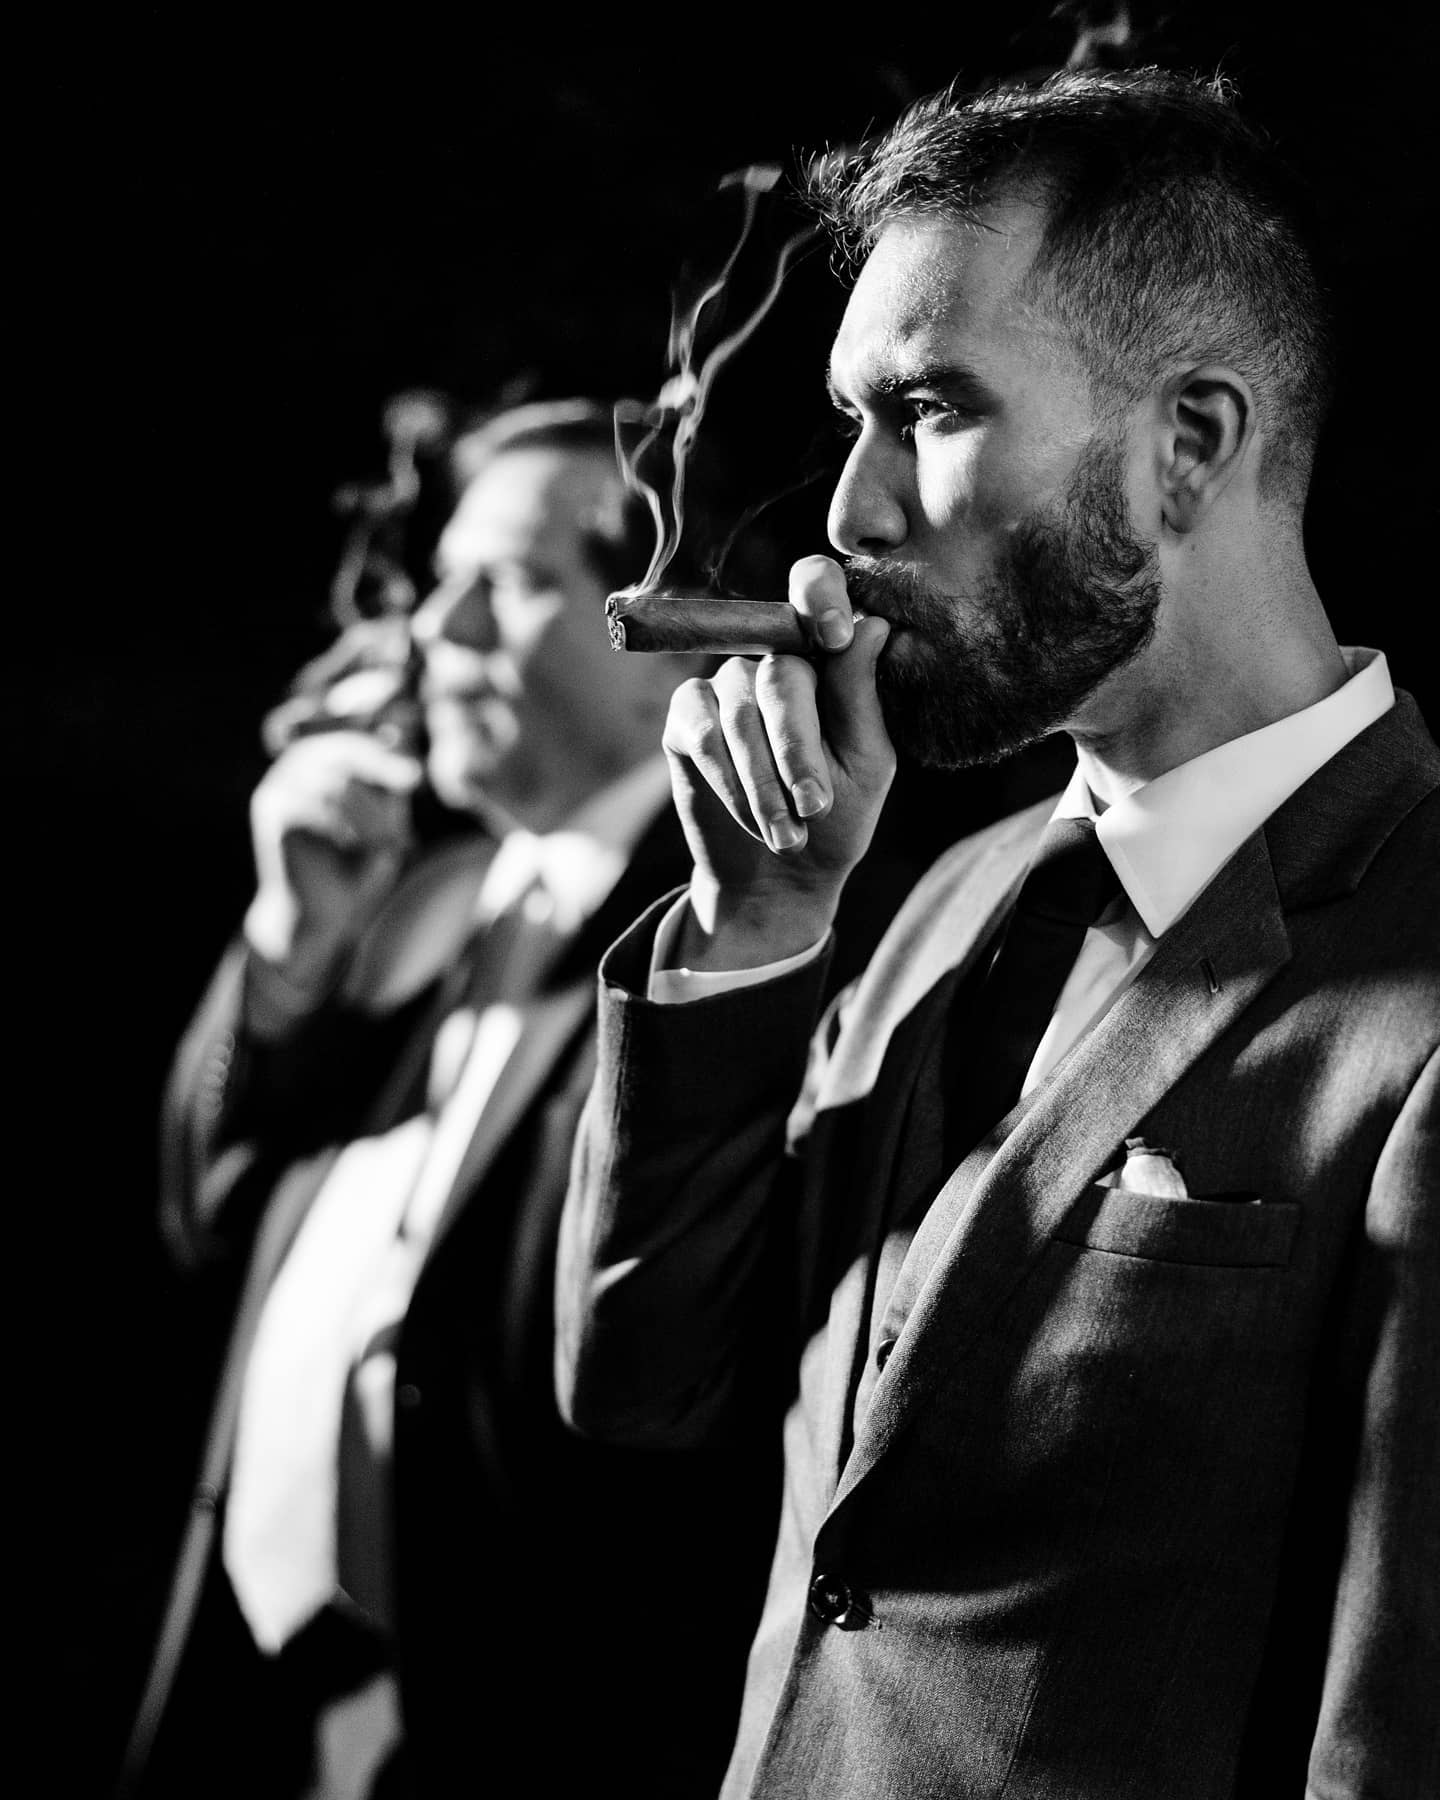 A monochrome portrait of a groom smoking a cigar